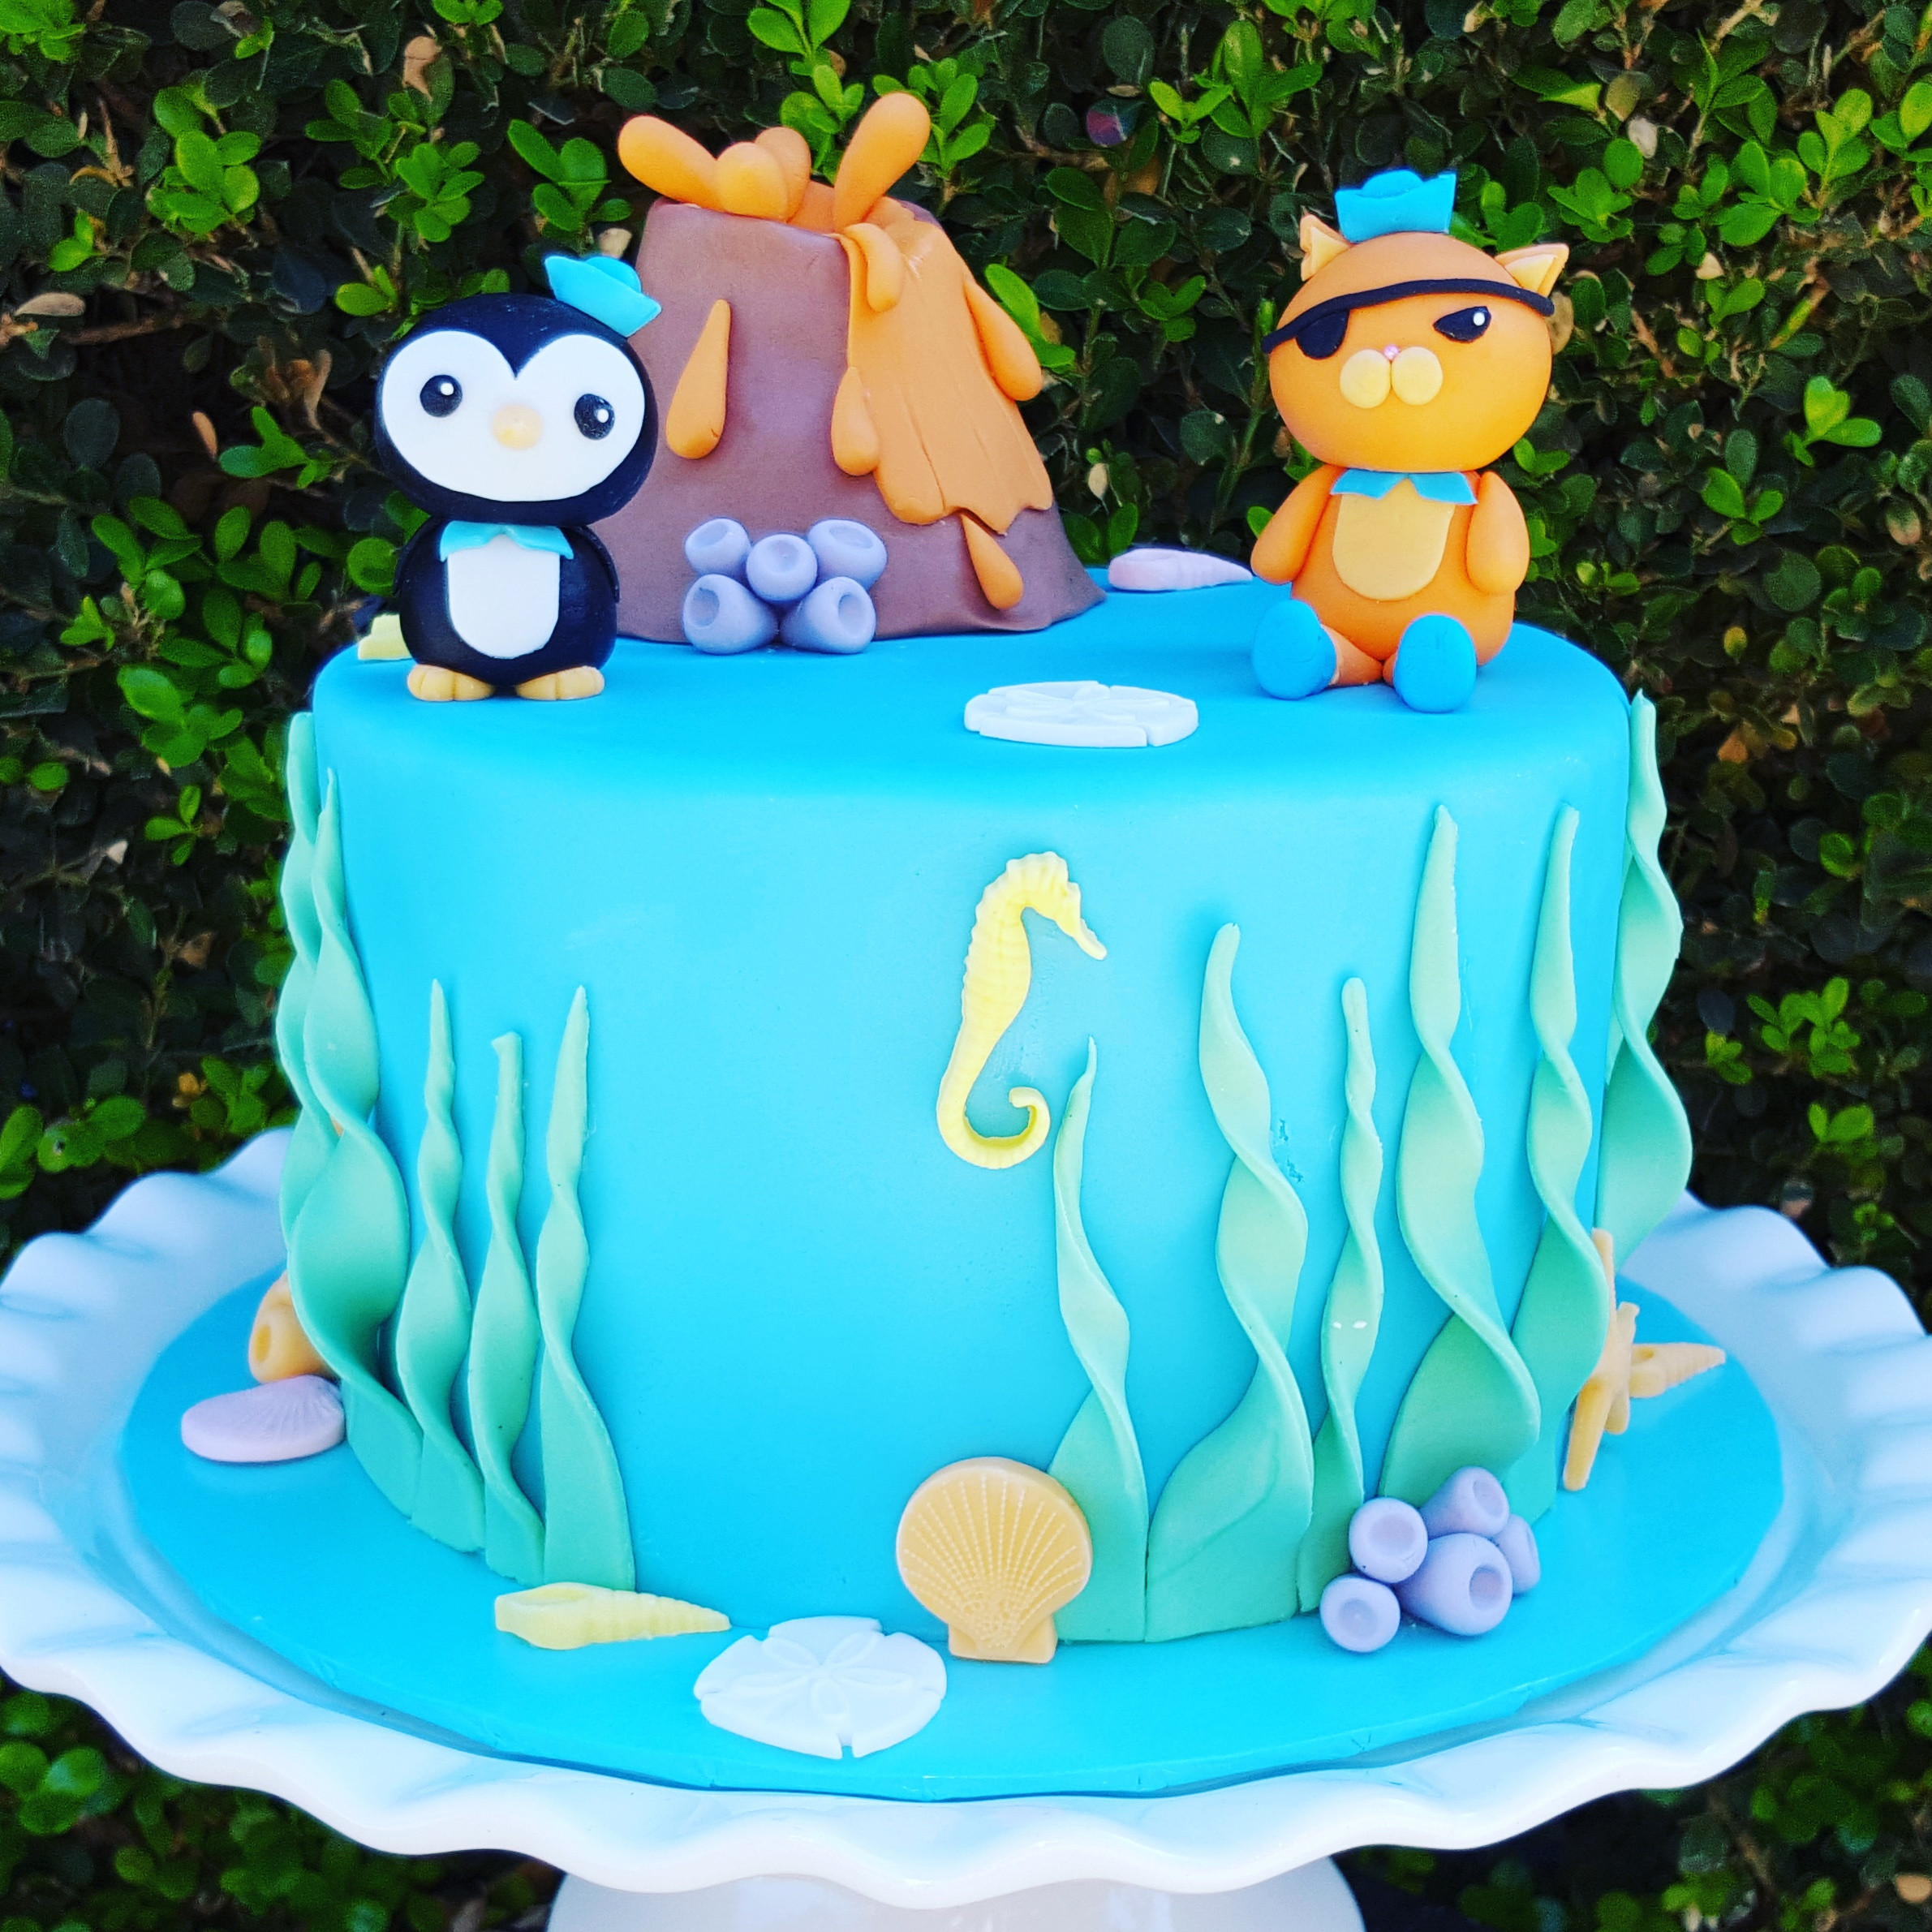 Toddler Birthday Cakes
 Kids Birthday Cakes by Paper Street Cake in Orange County CA